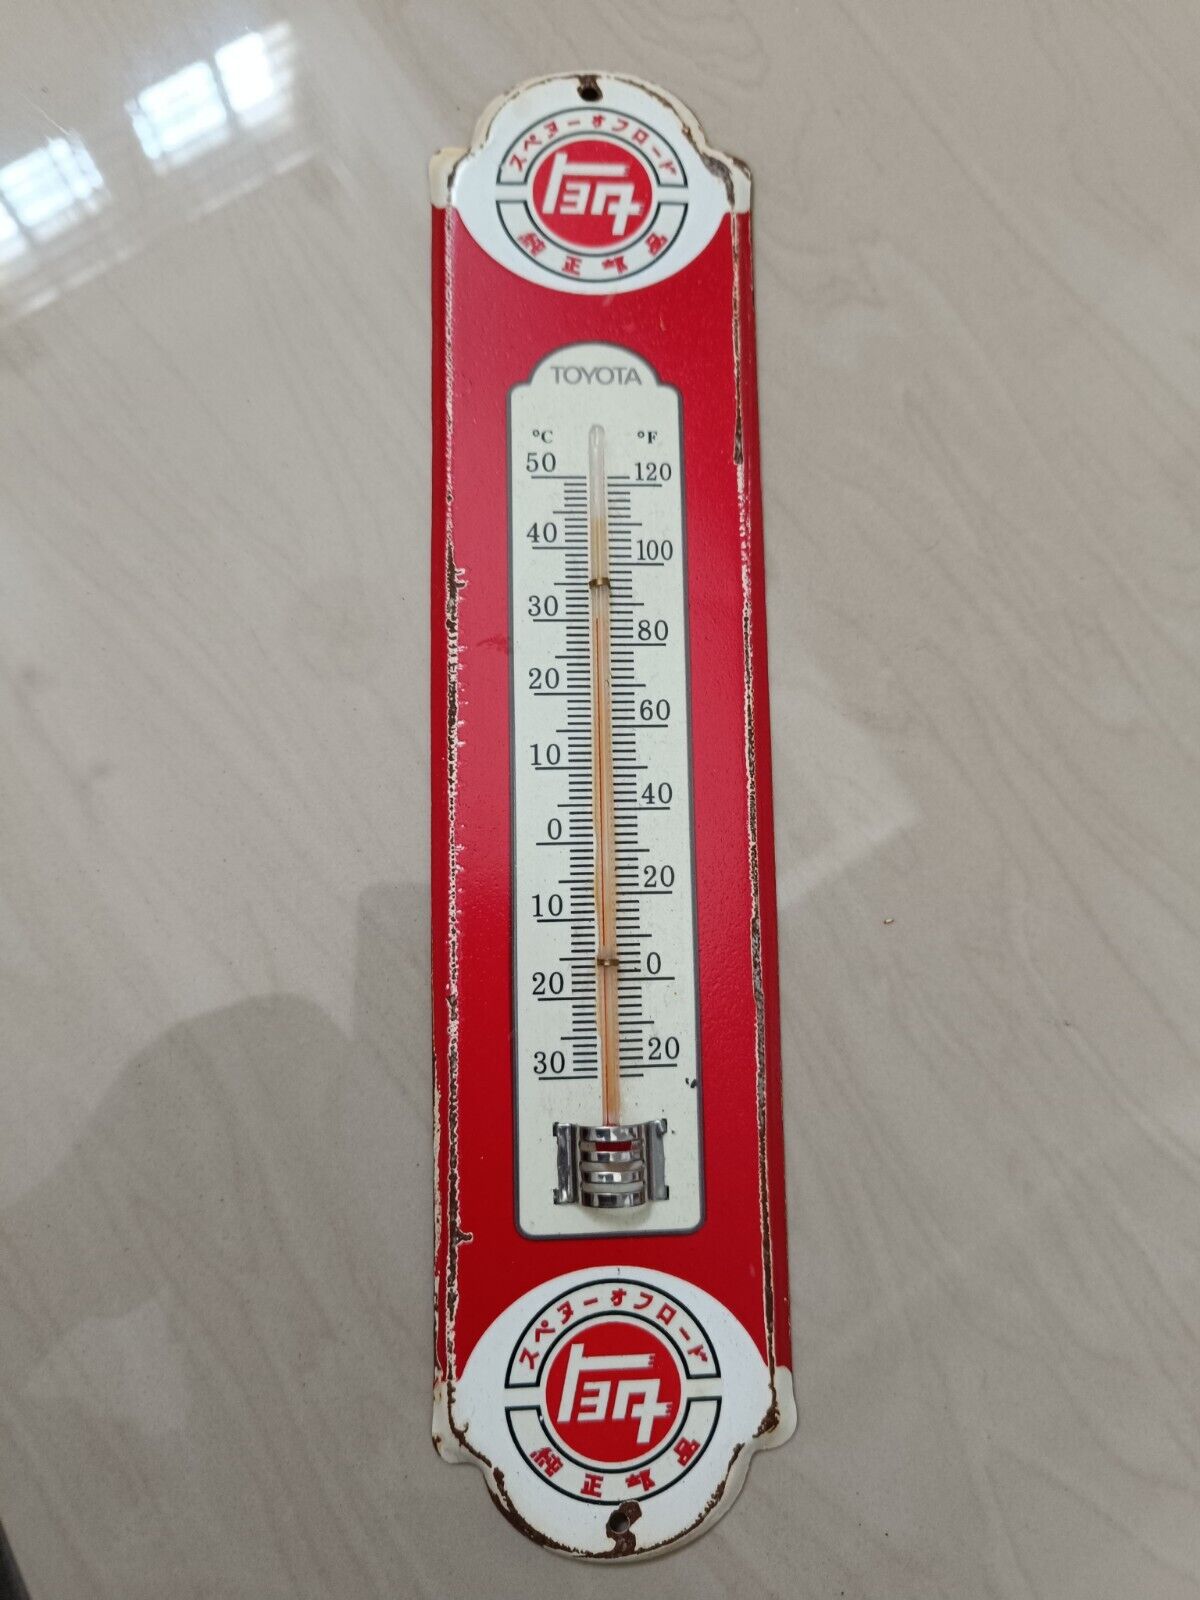 Super Rare Toyota Thermometer Gas & Oil Vintage Collectable automotive souvenir